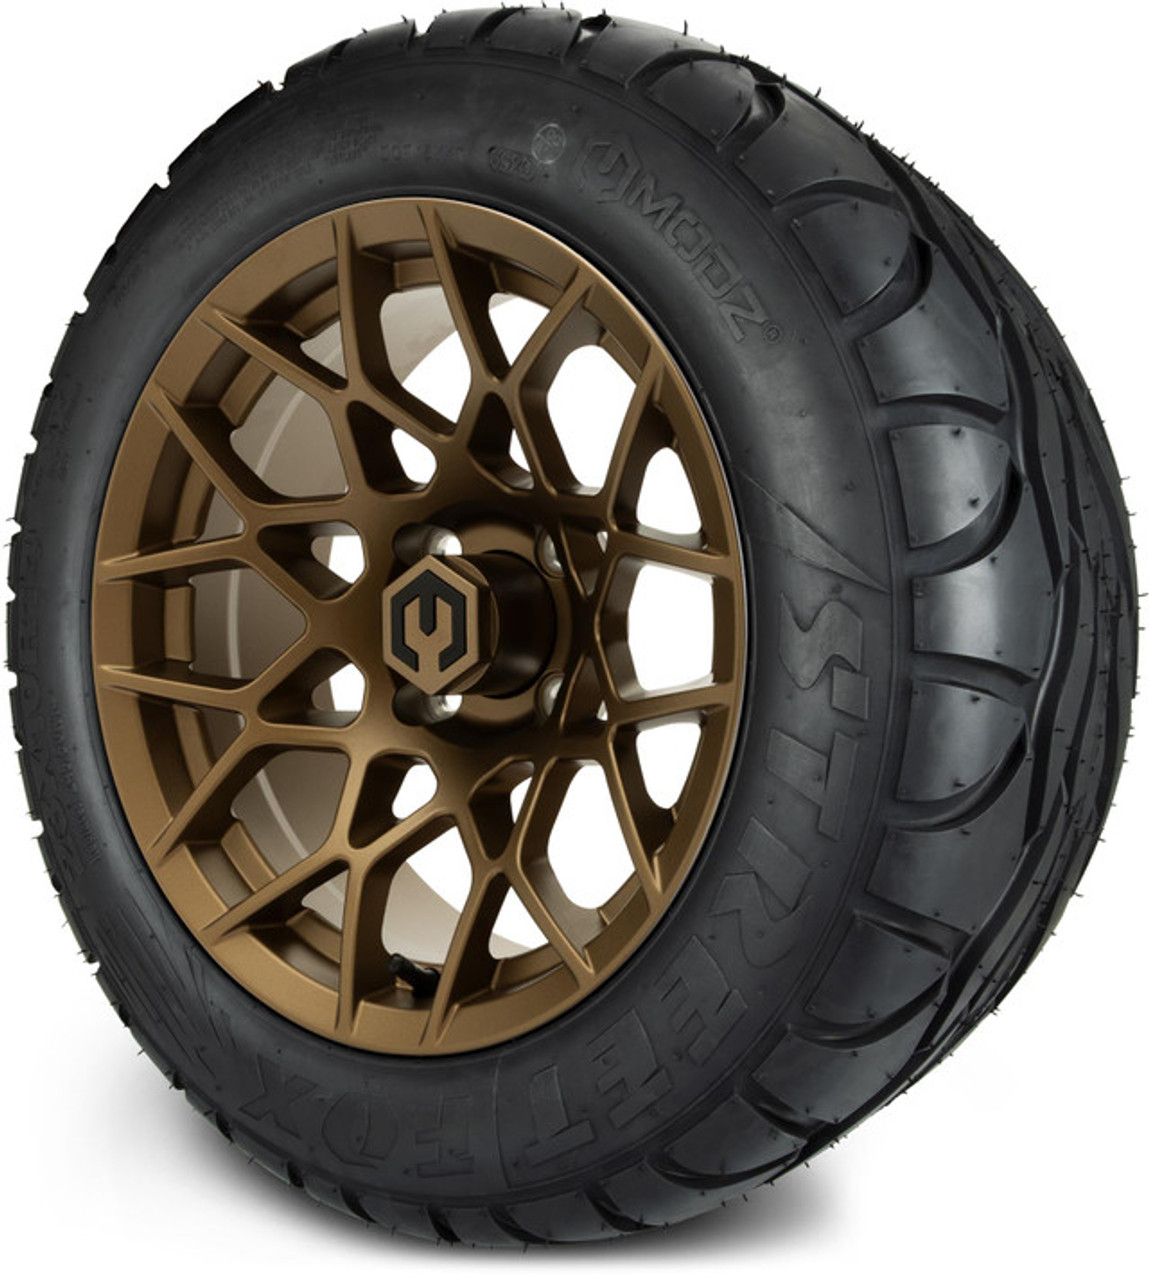 MODZ 14" Blitz Matte Bronze Wheels & Street Tires Combo